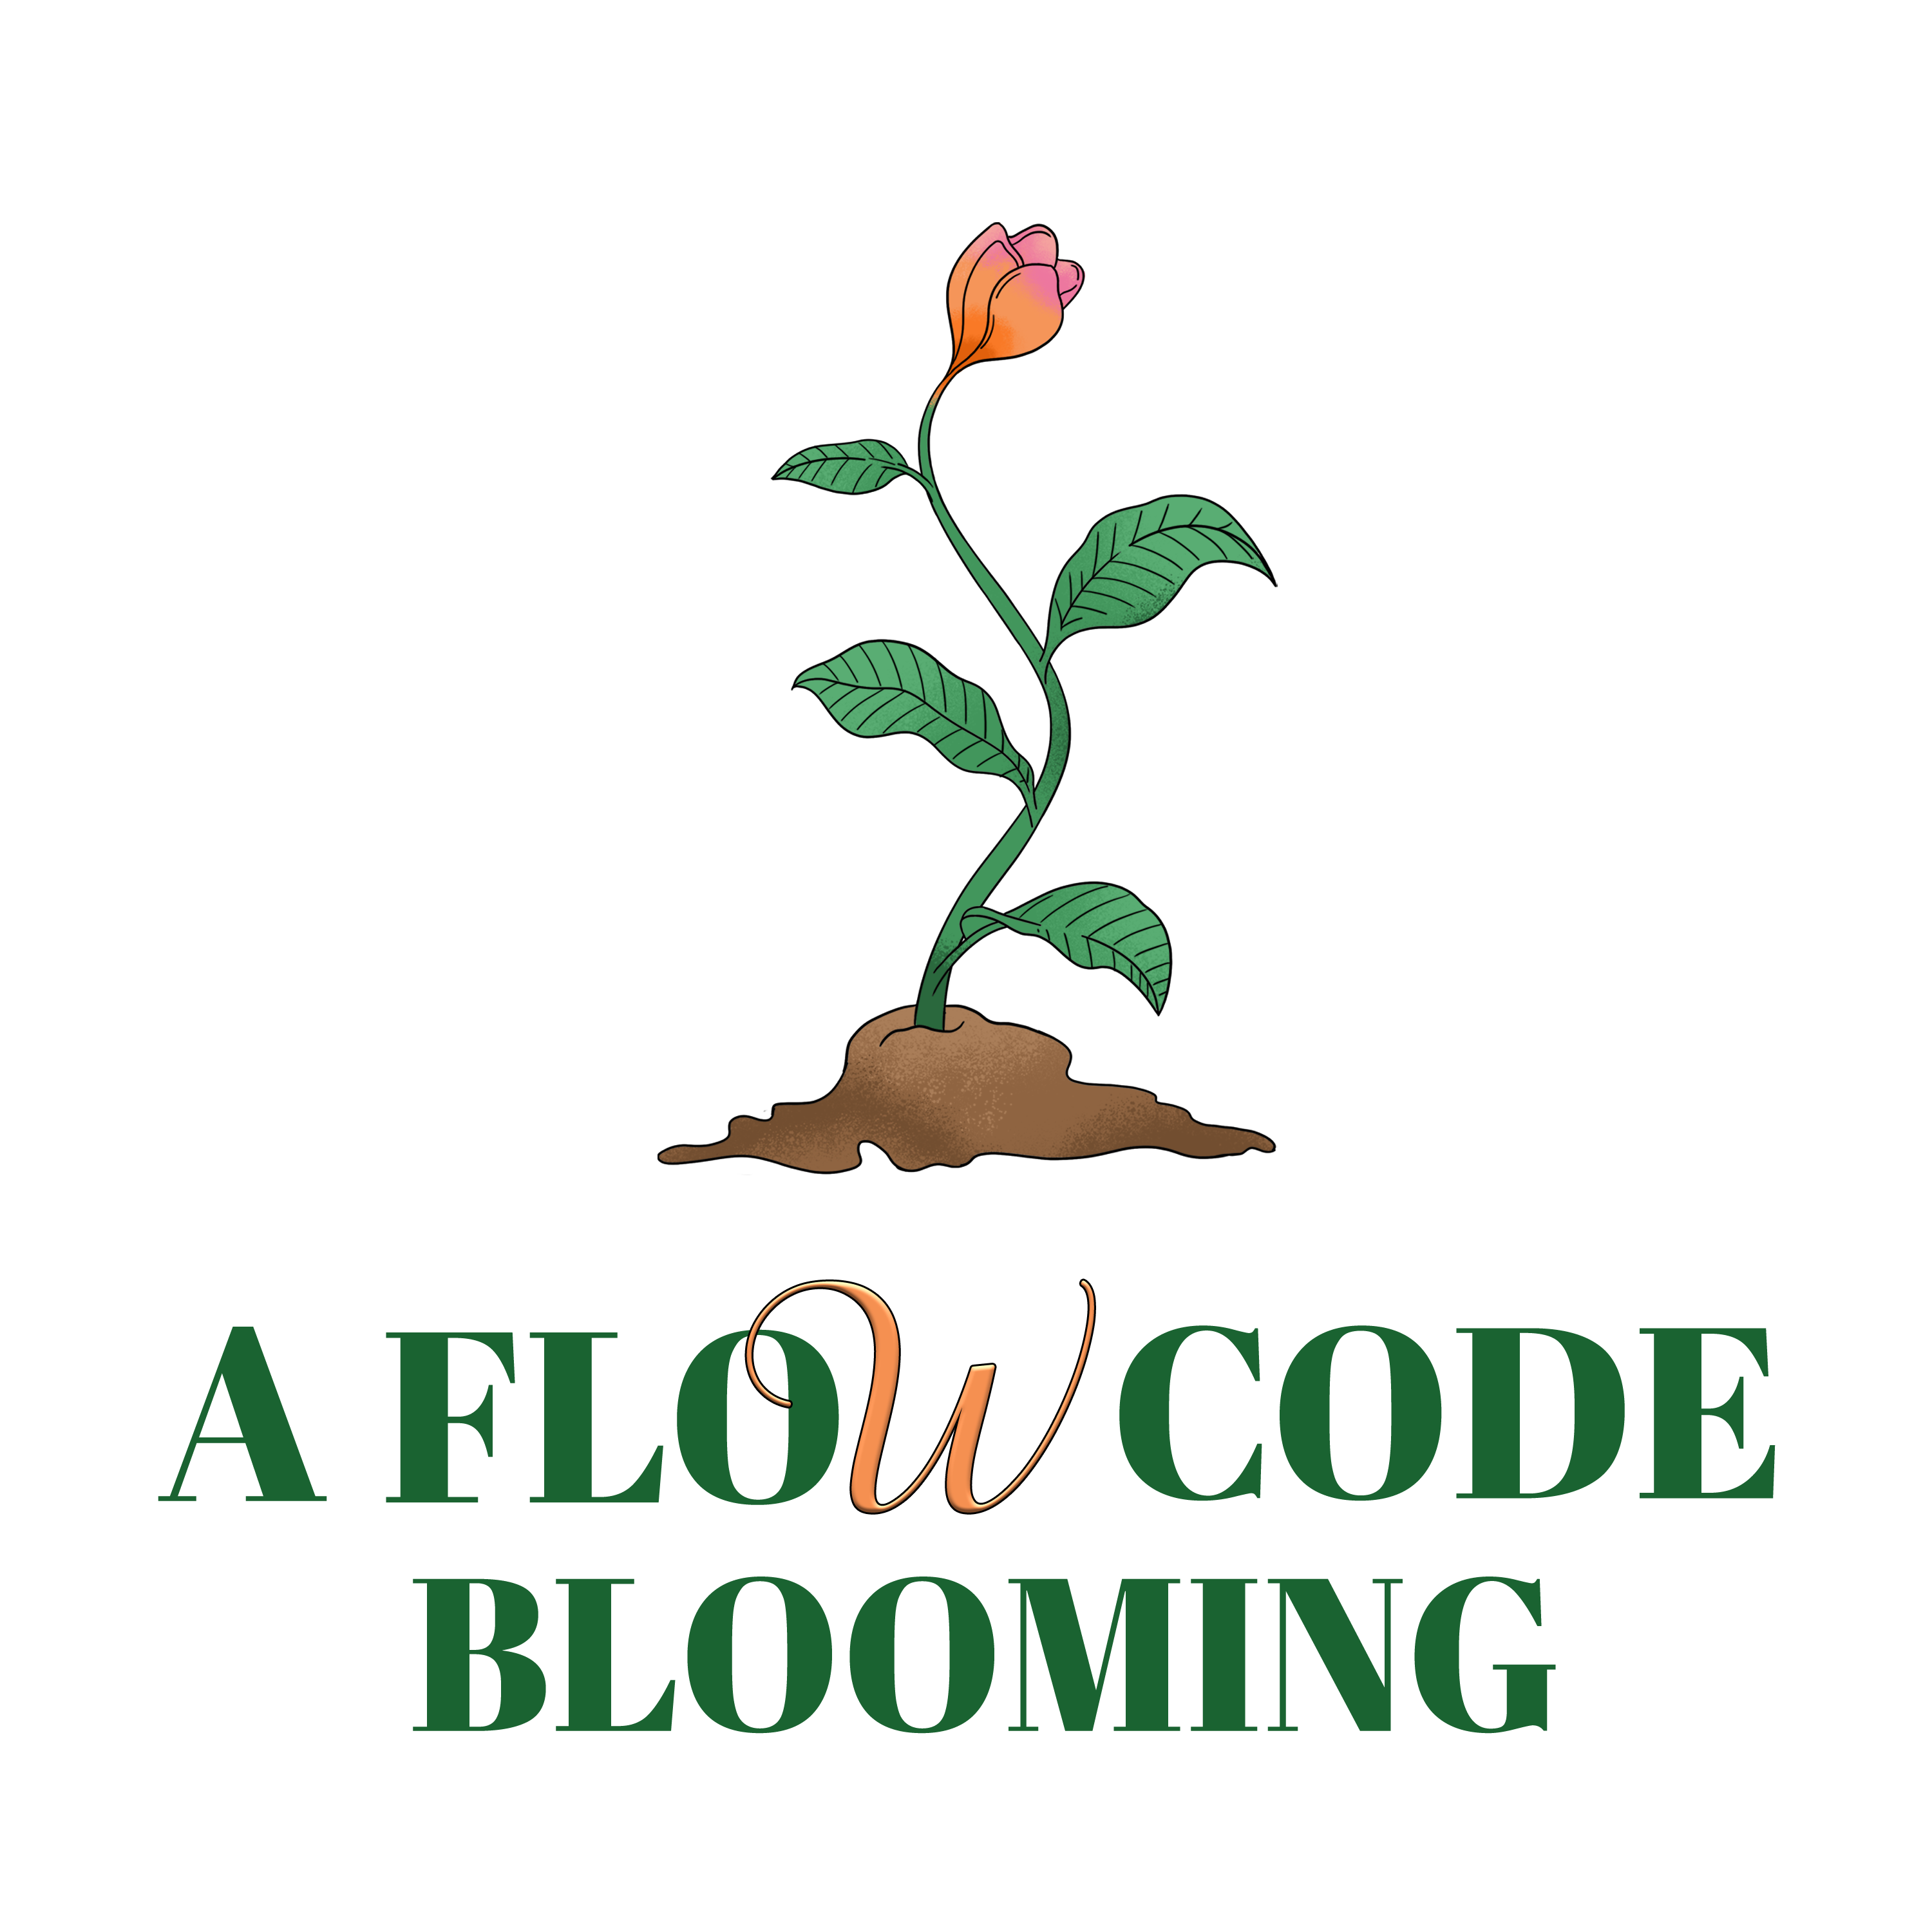 A-Flow-Code-Blooming